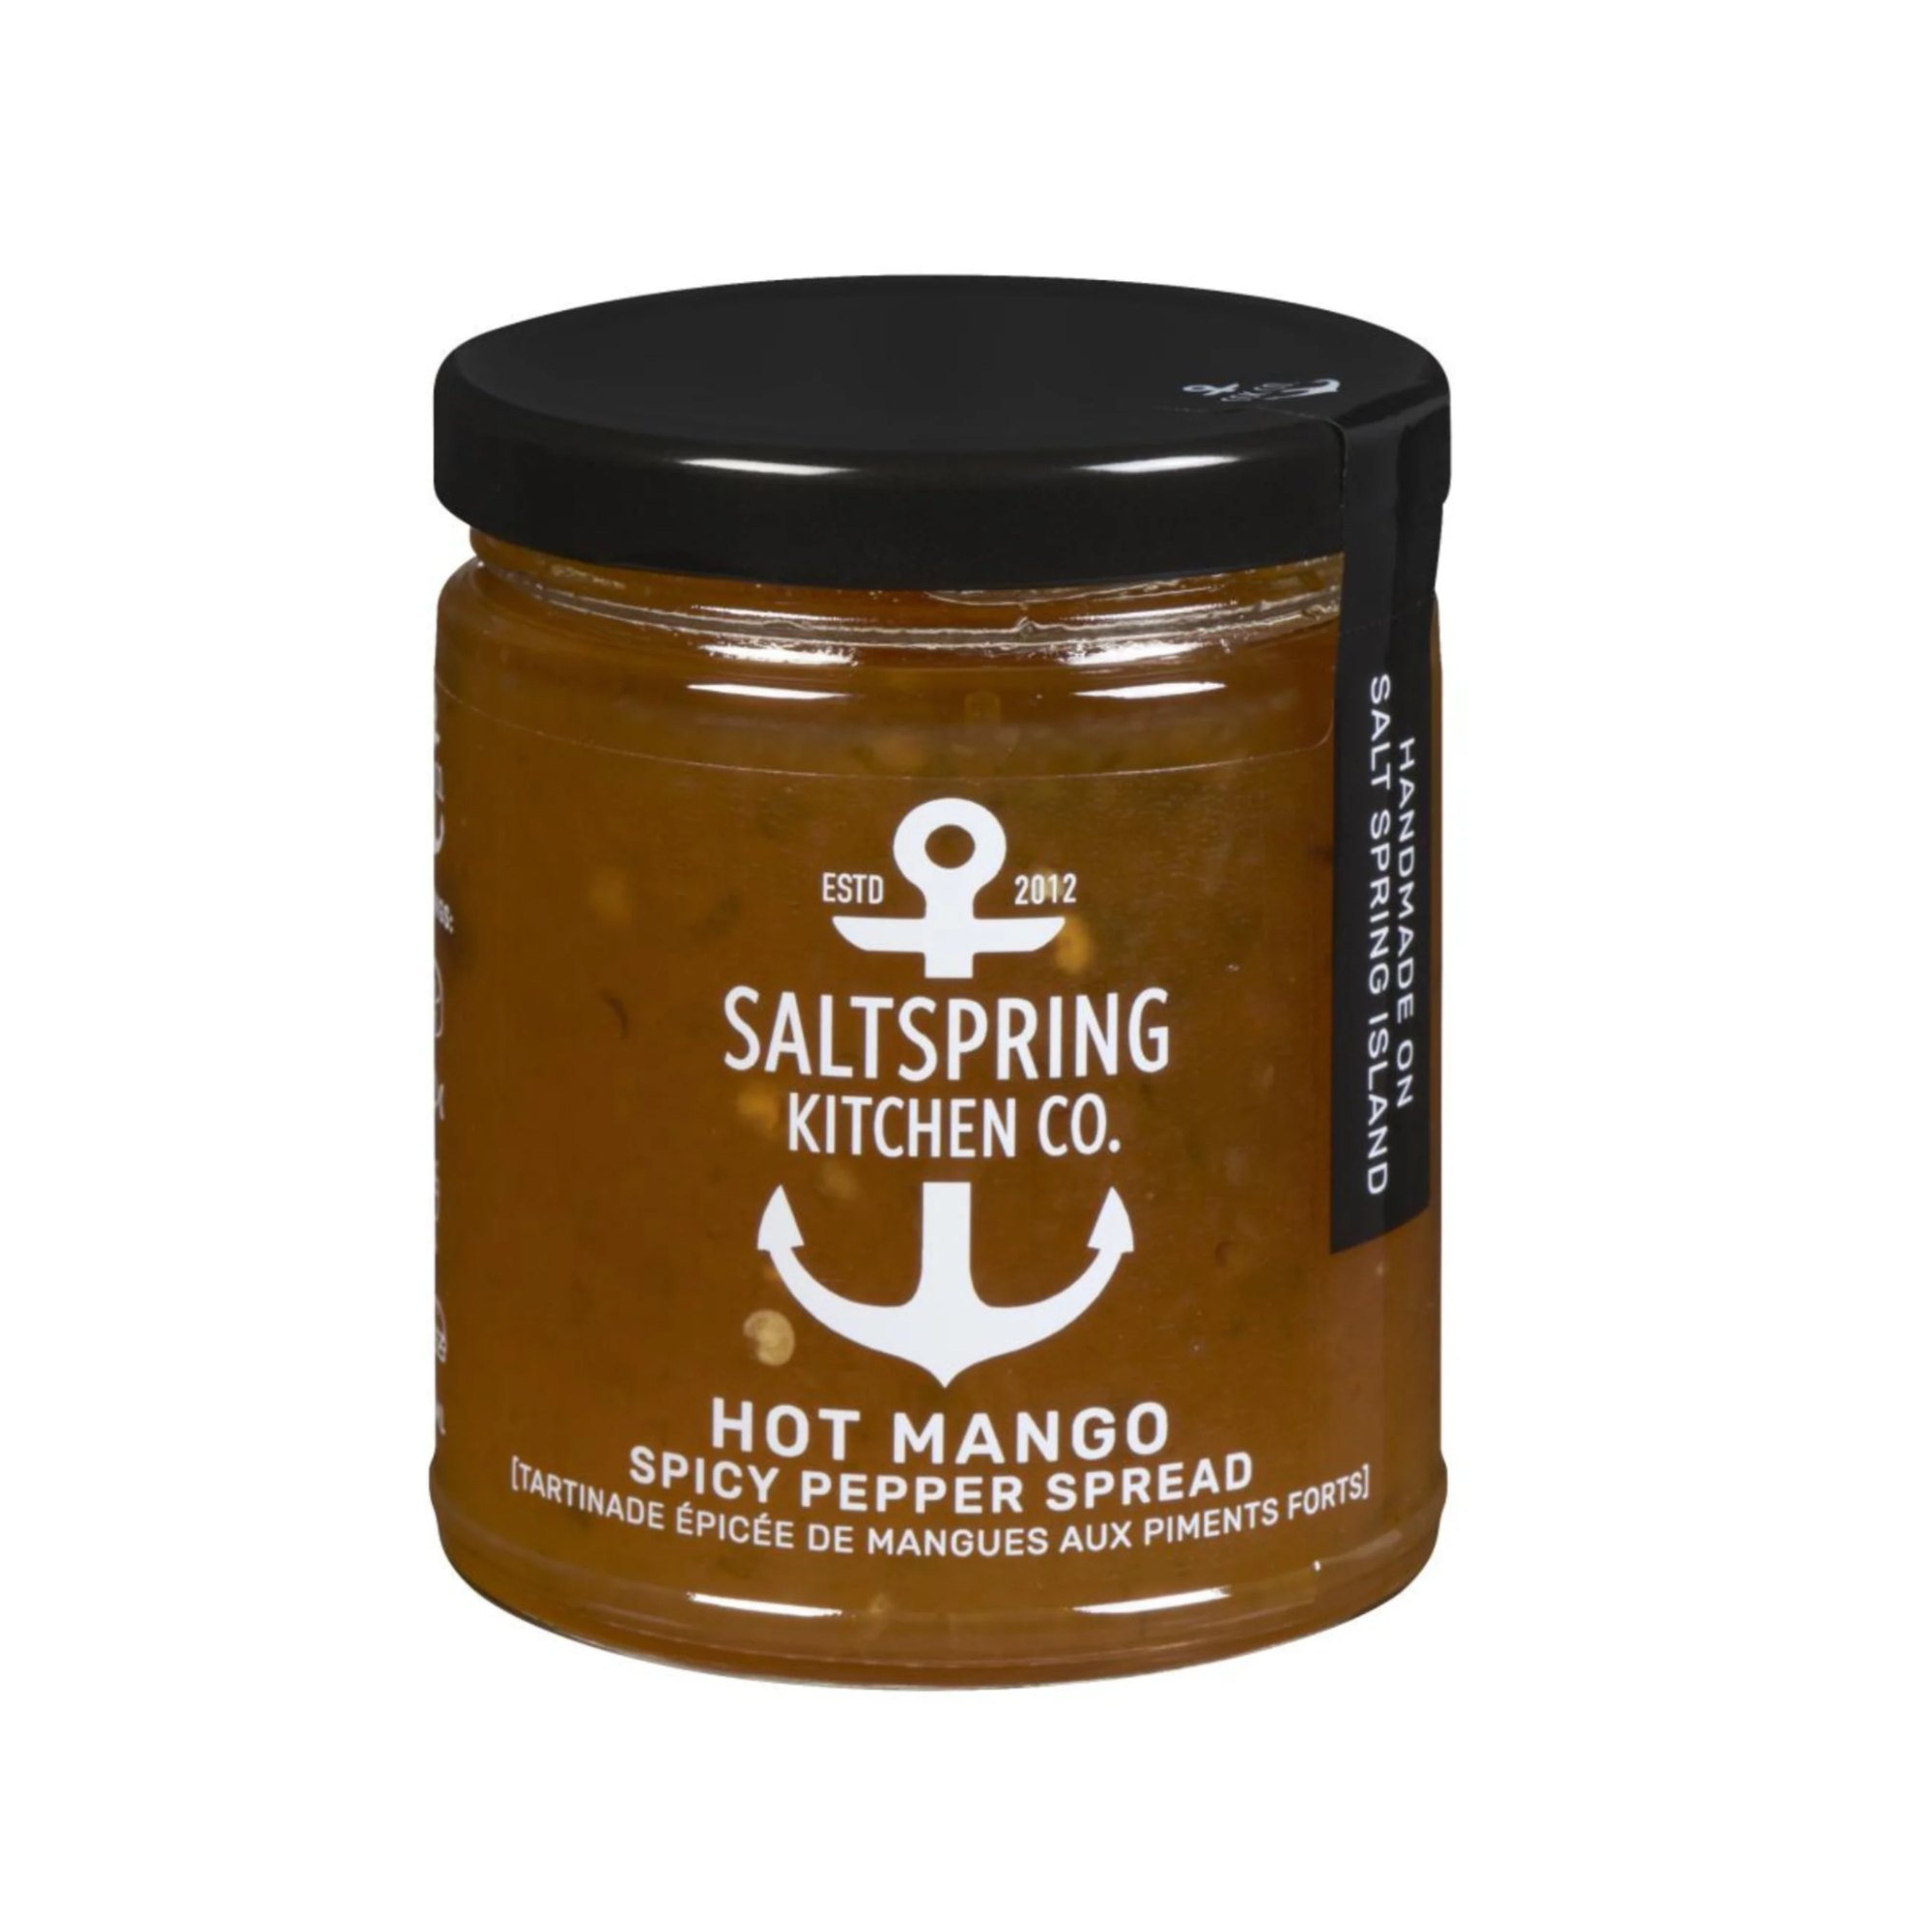 Saltspring Kitchen Co. Hot Mango Pepper Spread